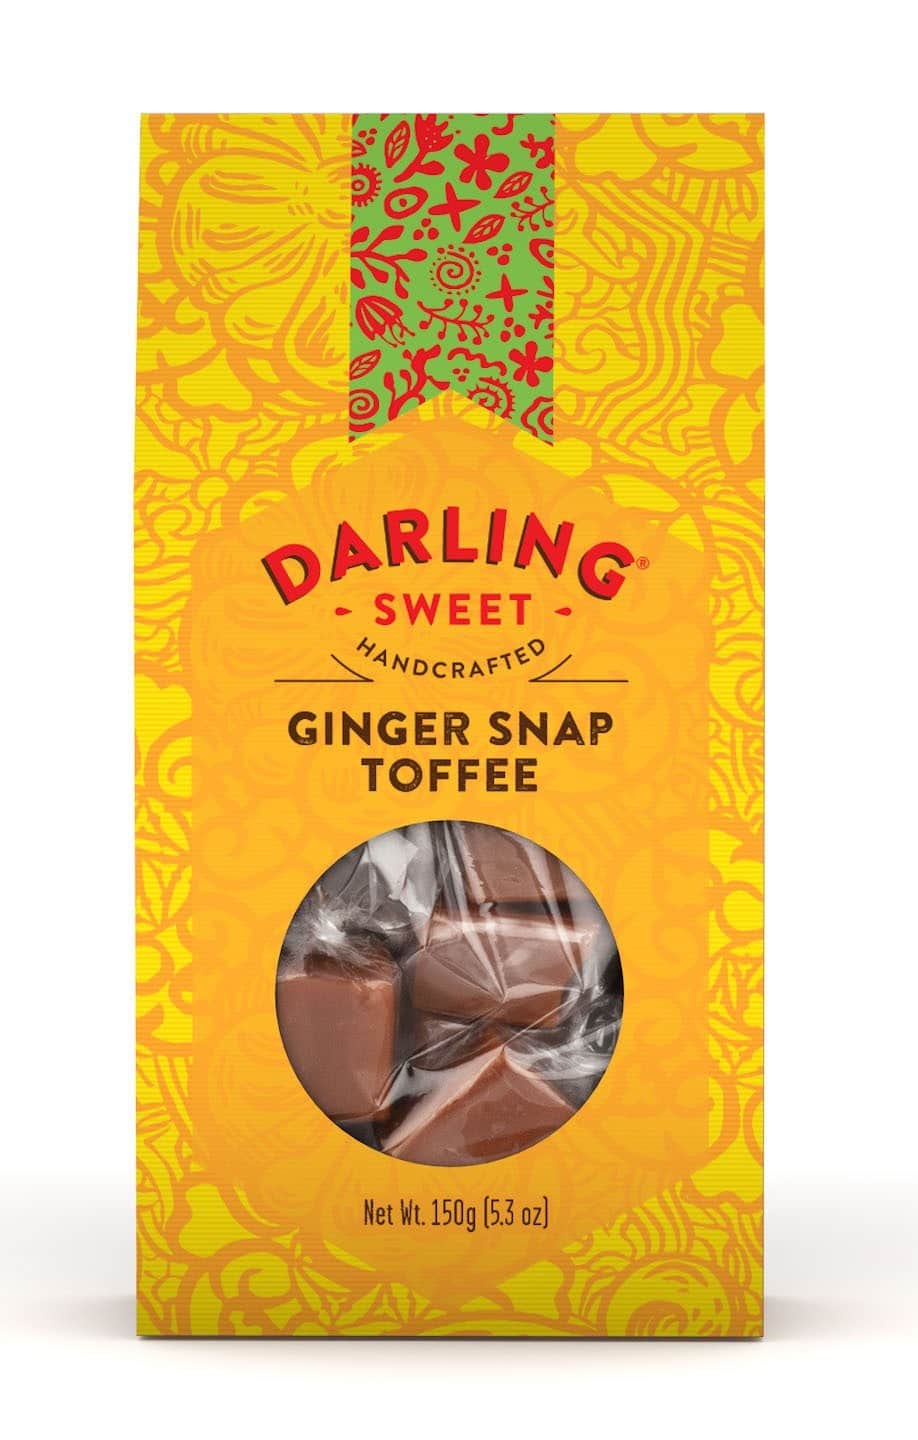 Darling Sweet Ginger Snap Toffee 150g